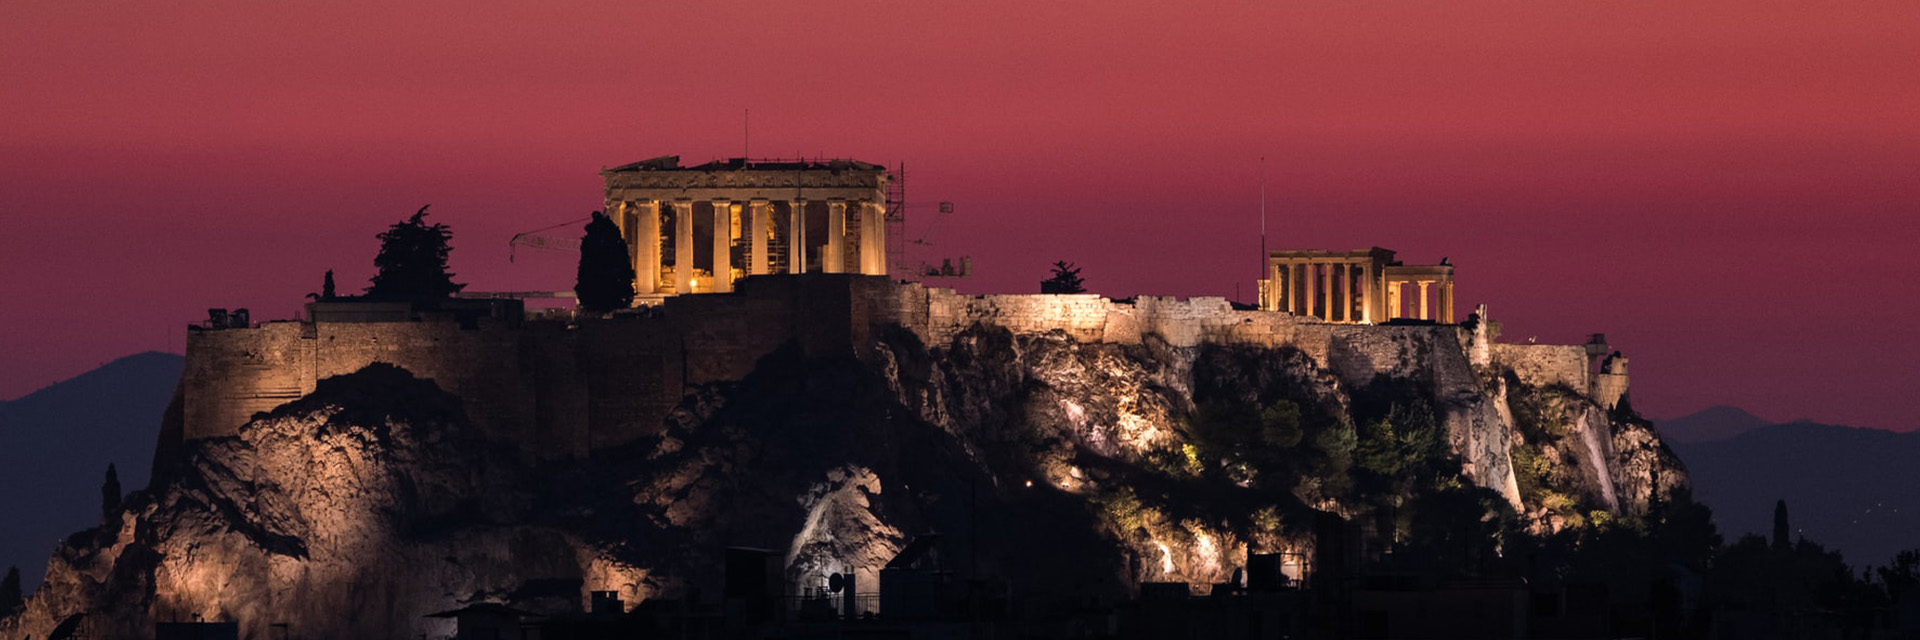 Sunset over Acropolis. Photo by AussieActive on Unsplash